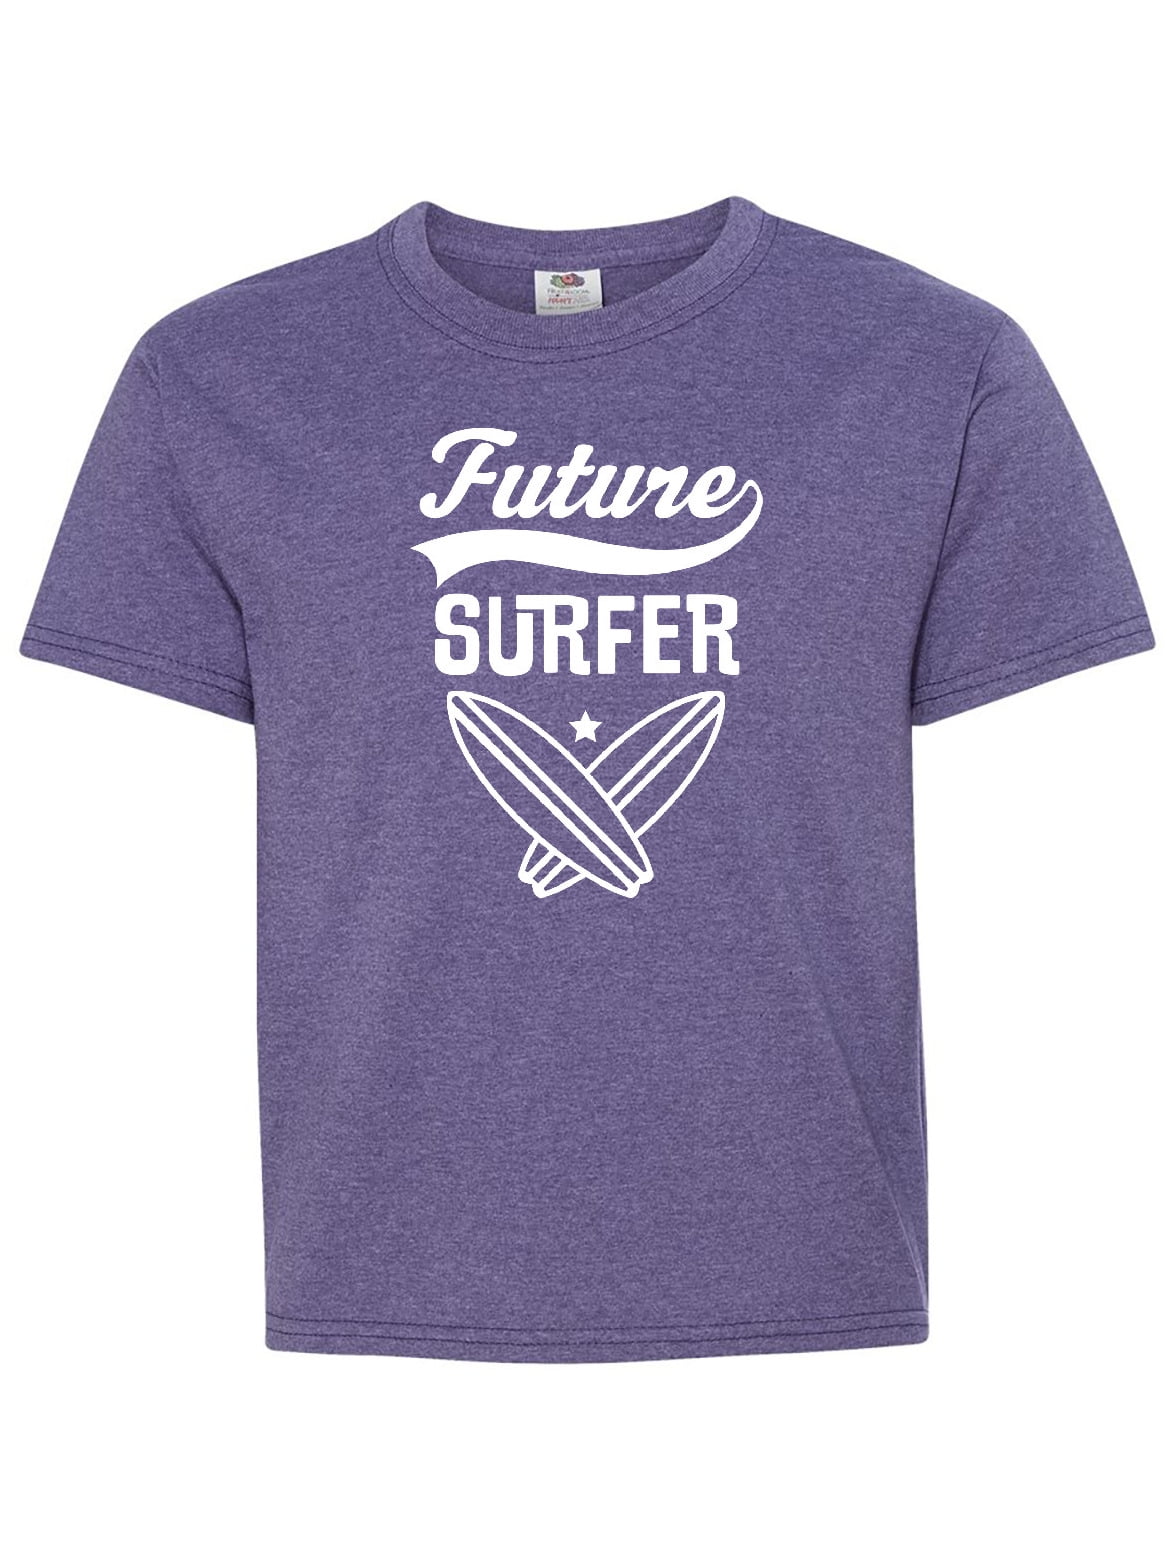 Surfing Future Surfer Youth T-Shirt - Walmart.com - Walmart.com